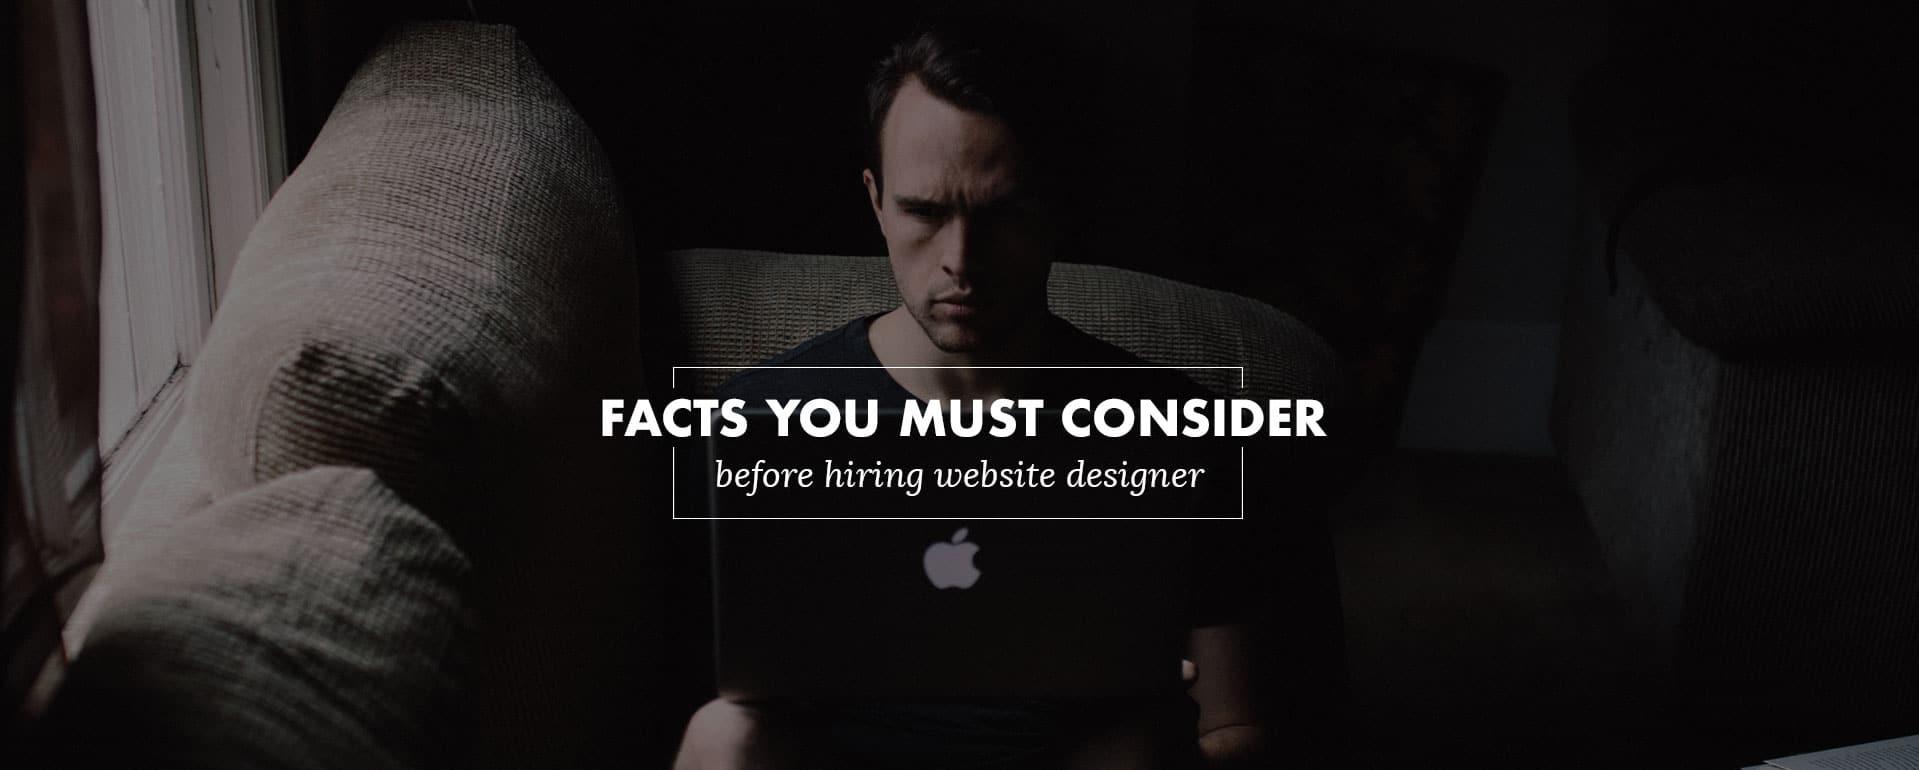 Facts You Must Consider Before Hiring Website Designer